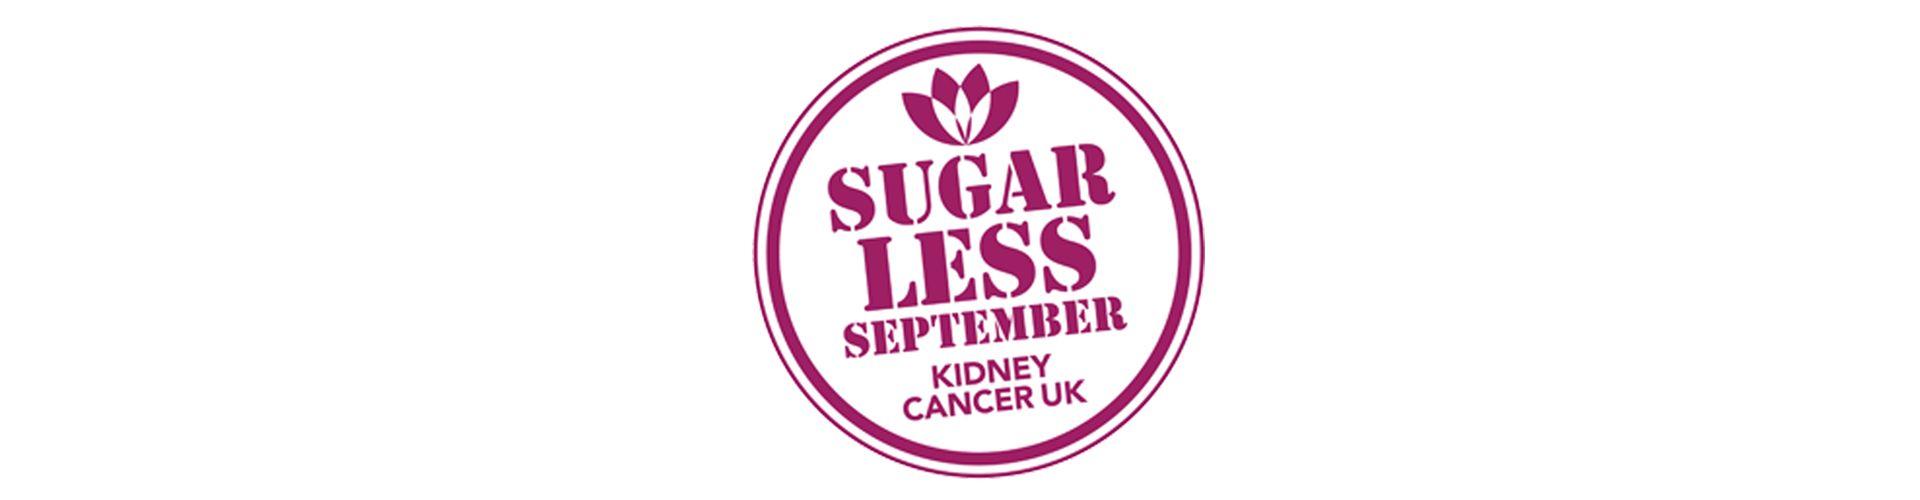 The Sugar Circle Logo - Kidney Cancer UK Sugar Less September Cancer UK